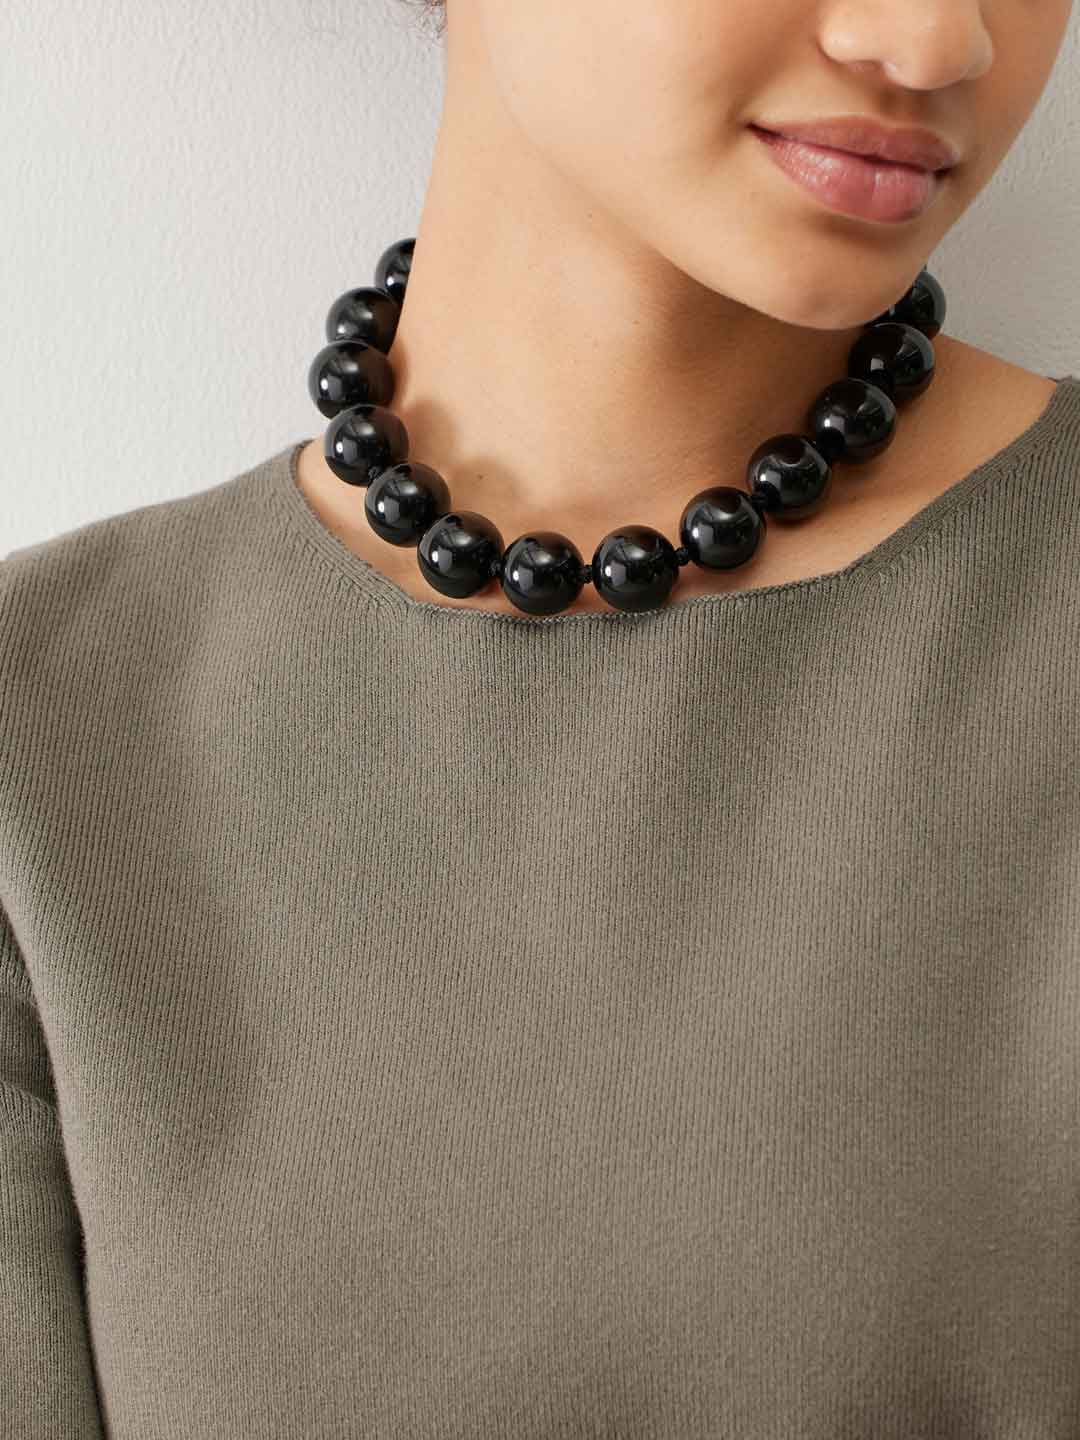 Onyx Boule Collar - Silver